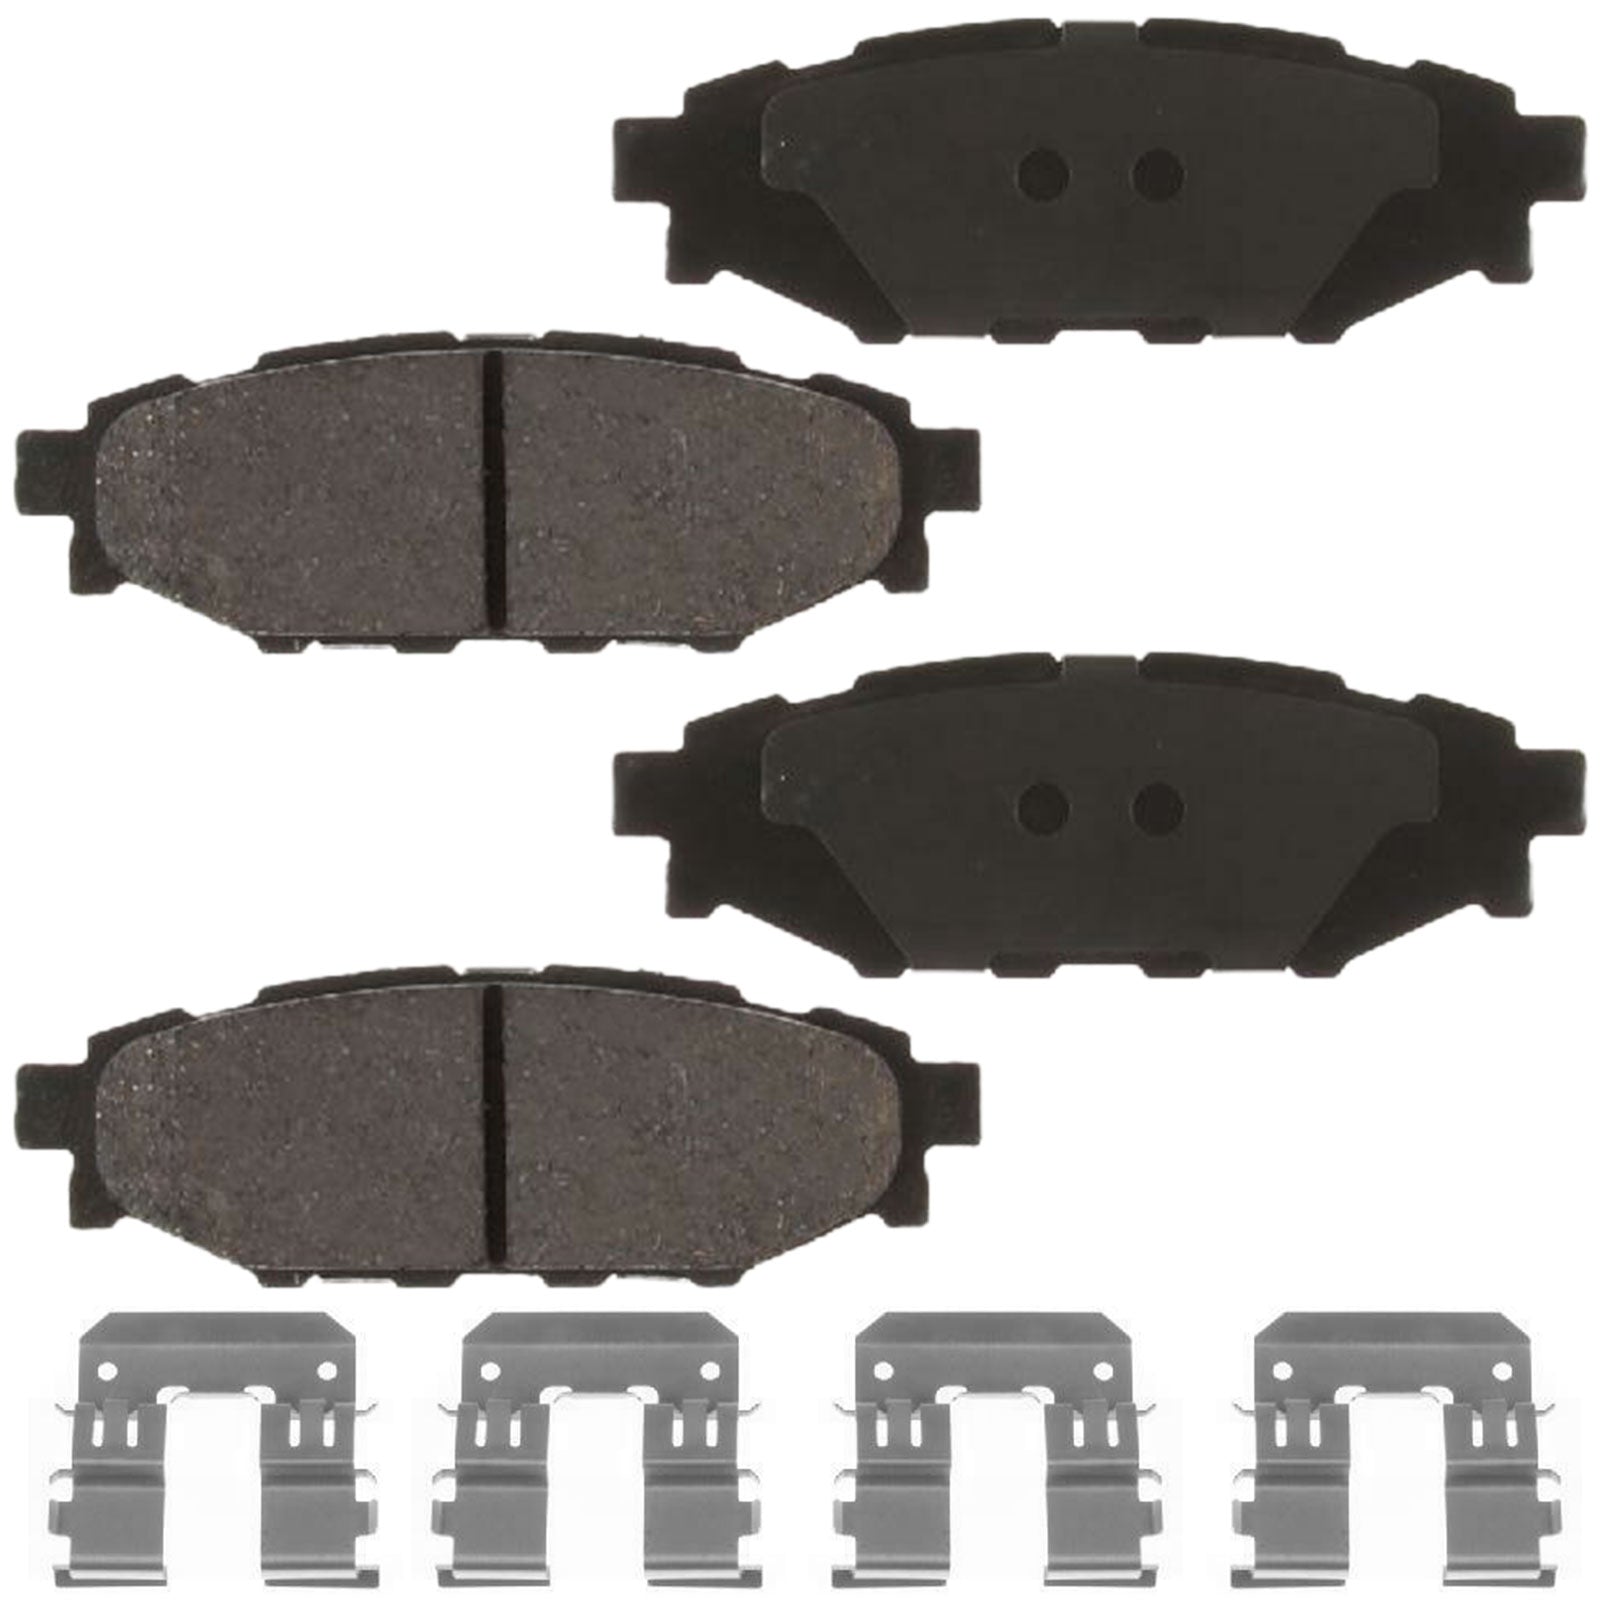 4PC Rear Ceramic Brake Pads with Hardware Kits Fits for Scion Fr-S, Subaru Brz Crosstrek Forester Impreza Legacy Outback Wrx XV Low Dust Brake Pad MotorbyMotor